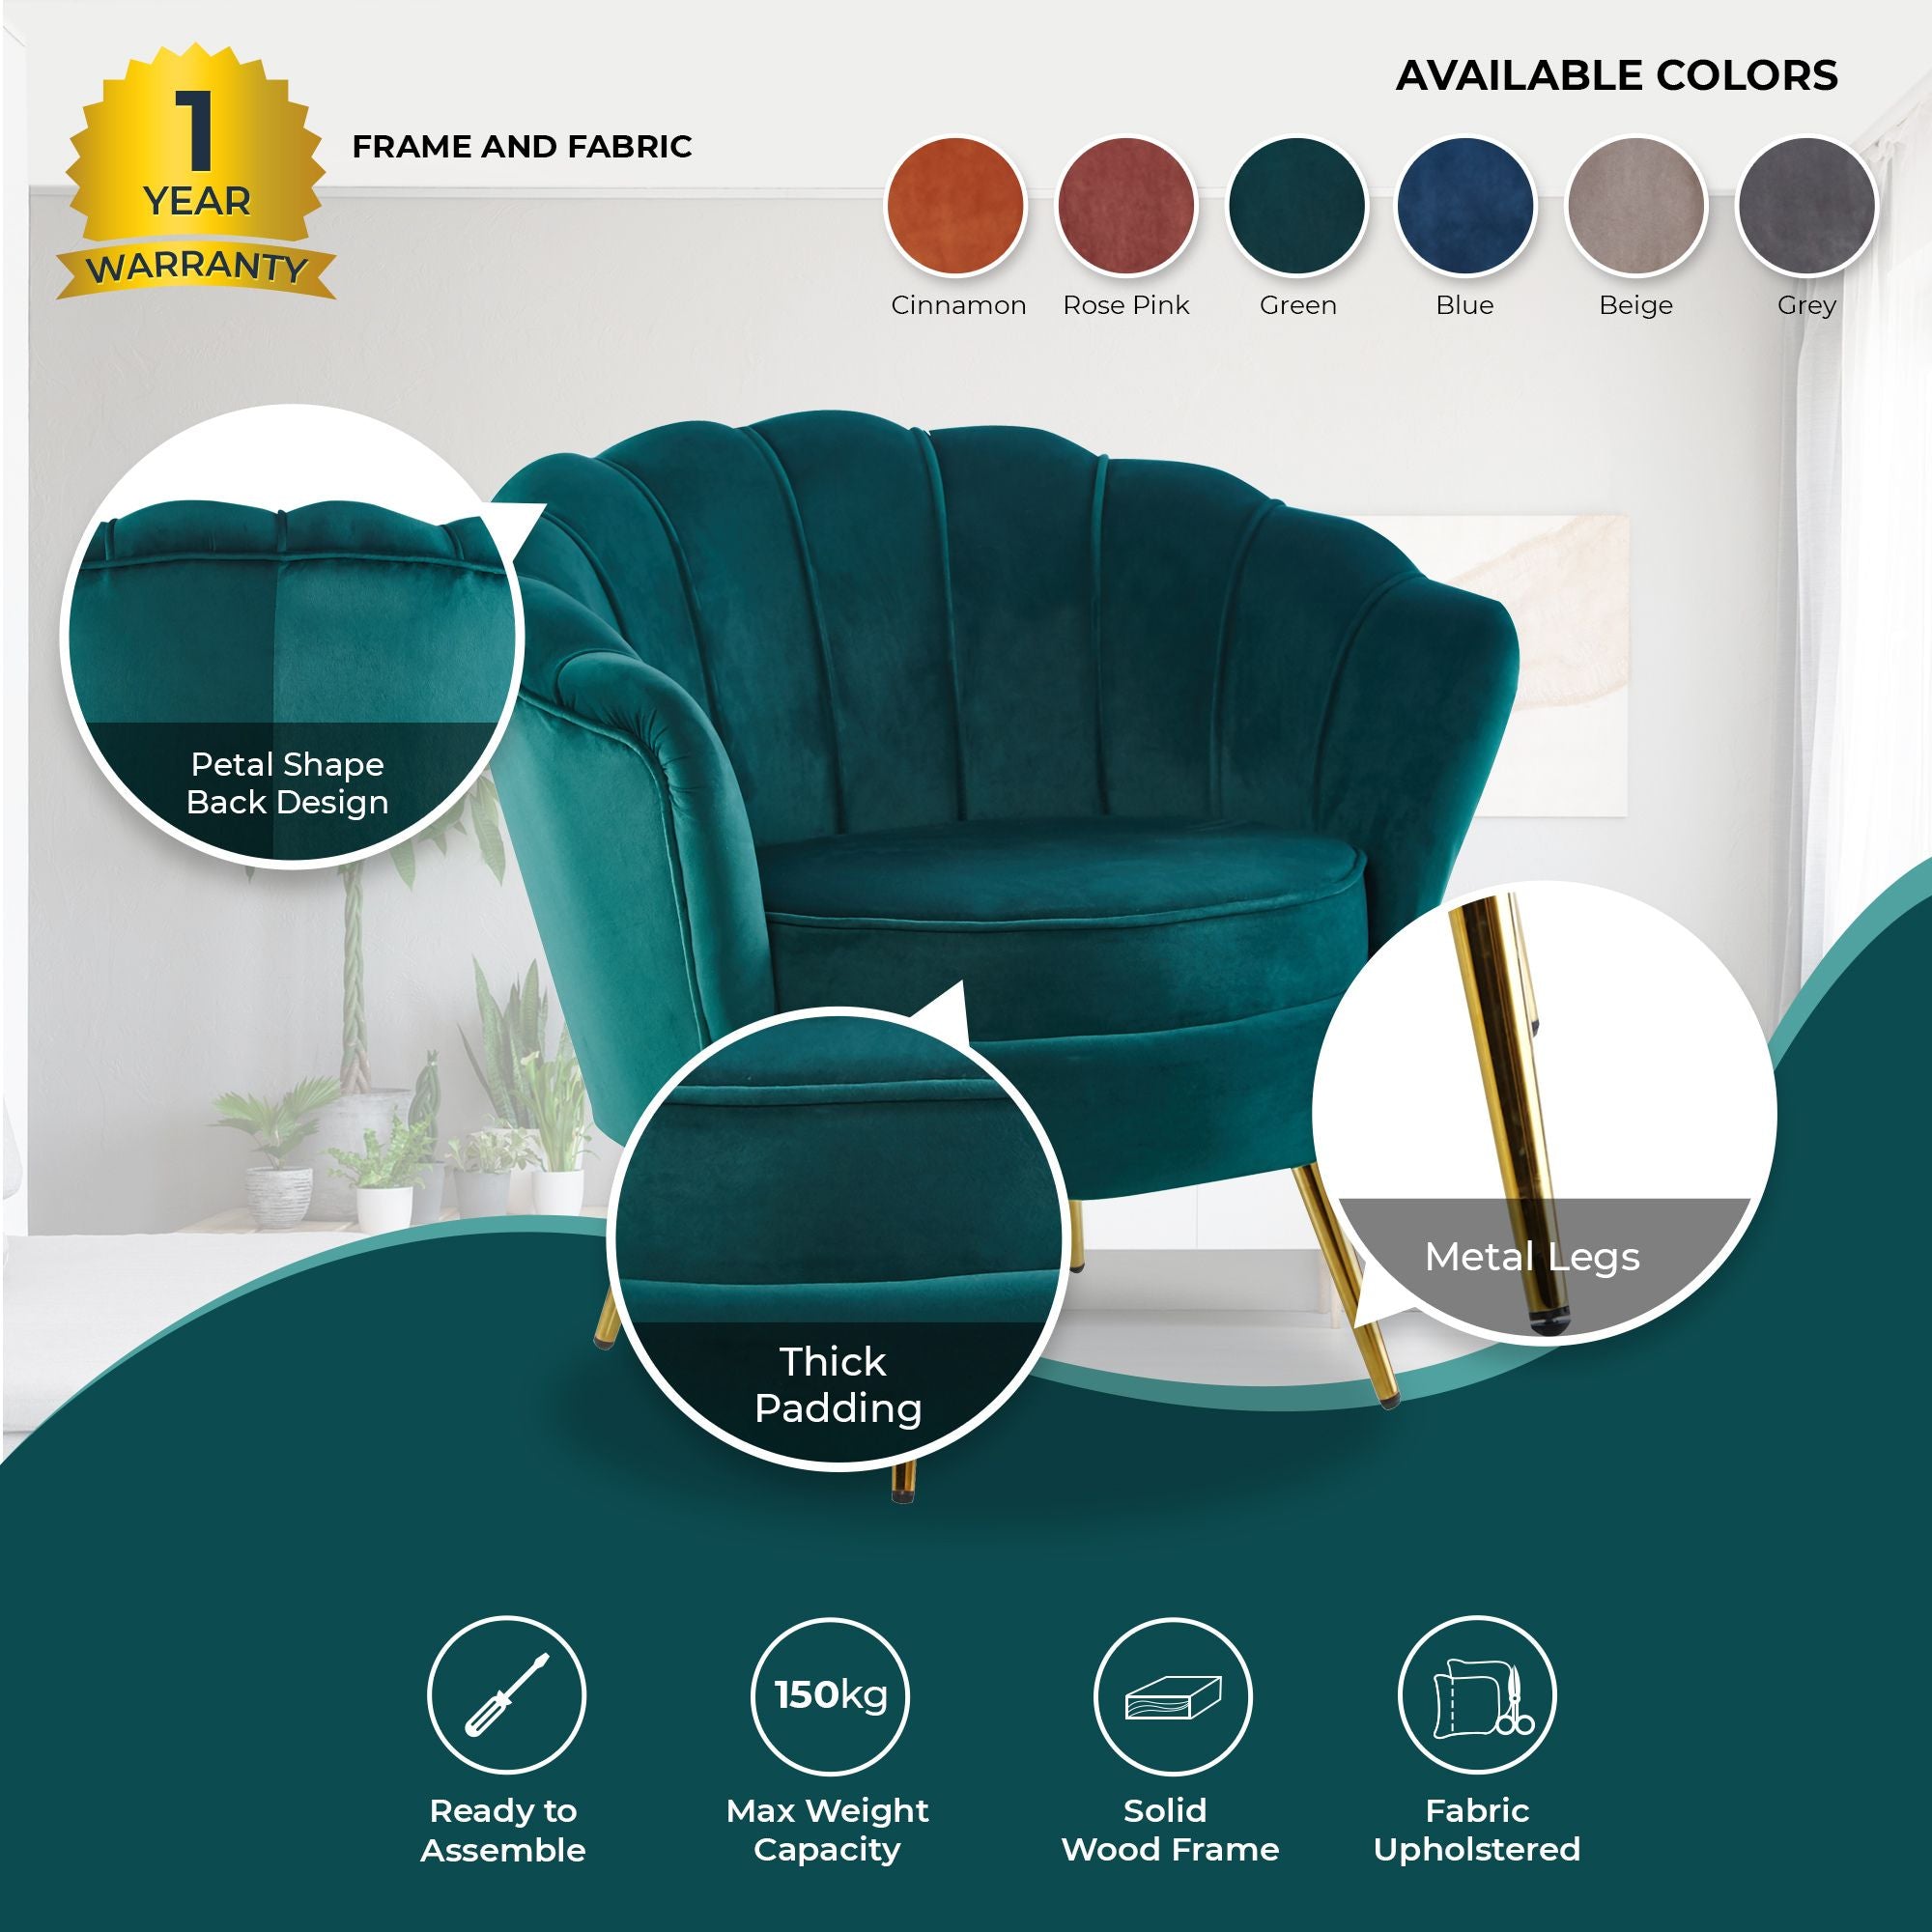 Bloomer Velvet Fabric Accent Sofa Love Chair Round Ottoman Set - Green.